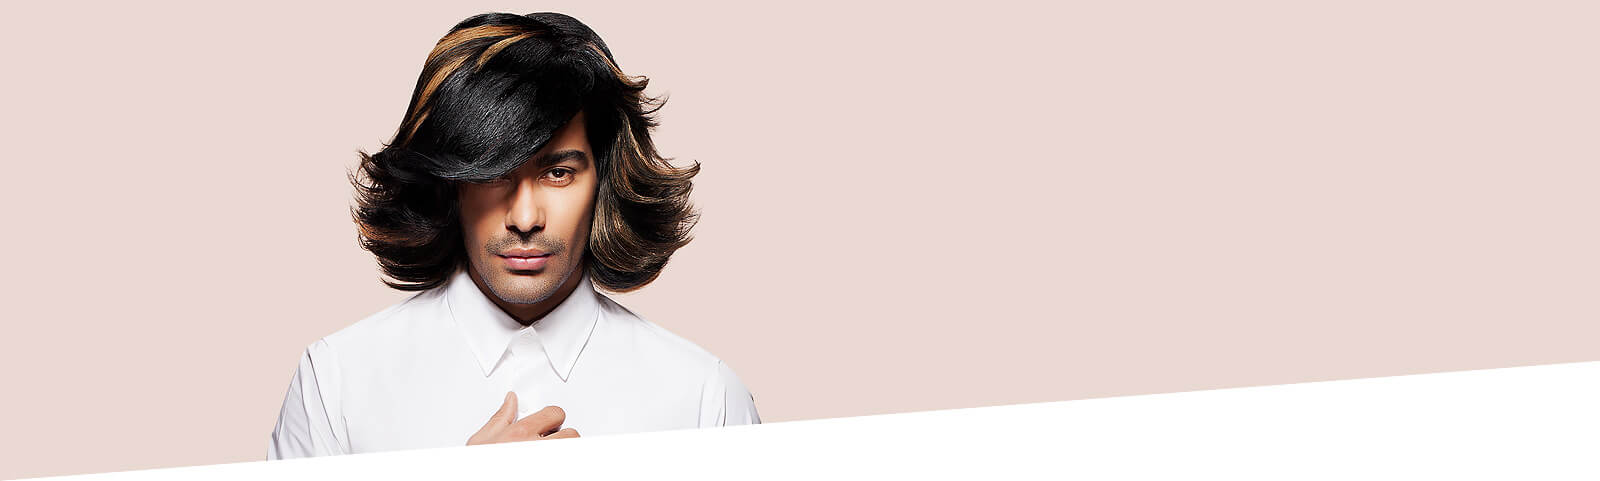 Men's Hair Style, Long Hair - Looks Salon